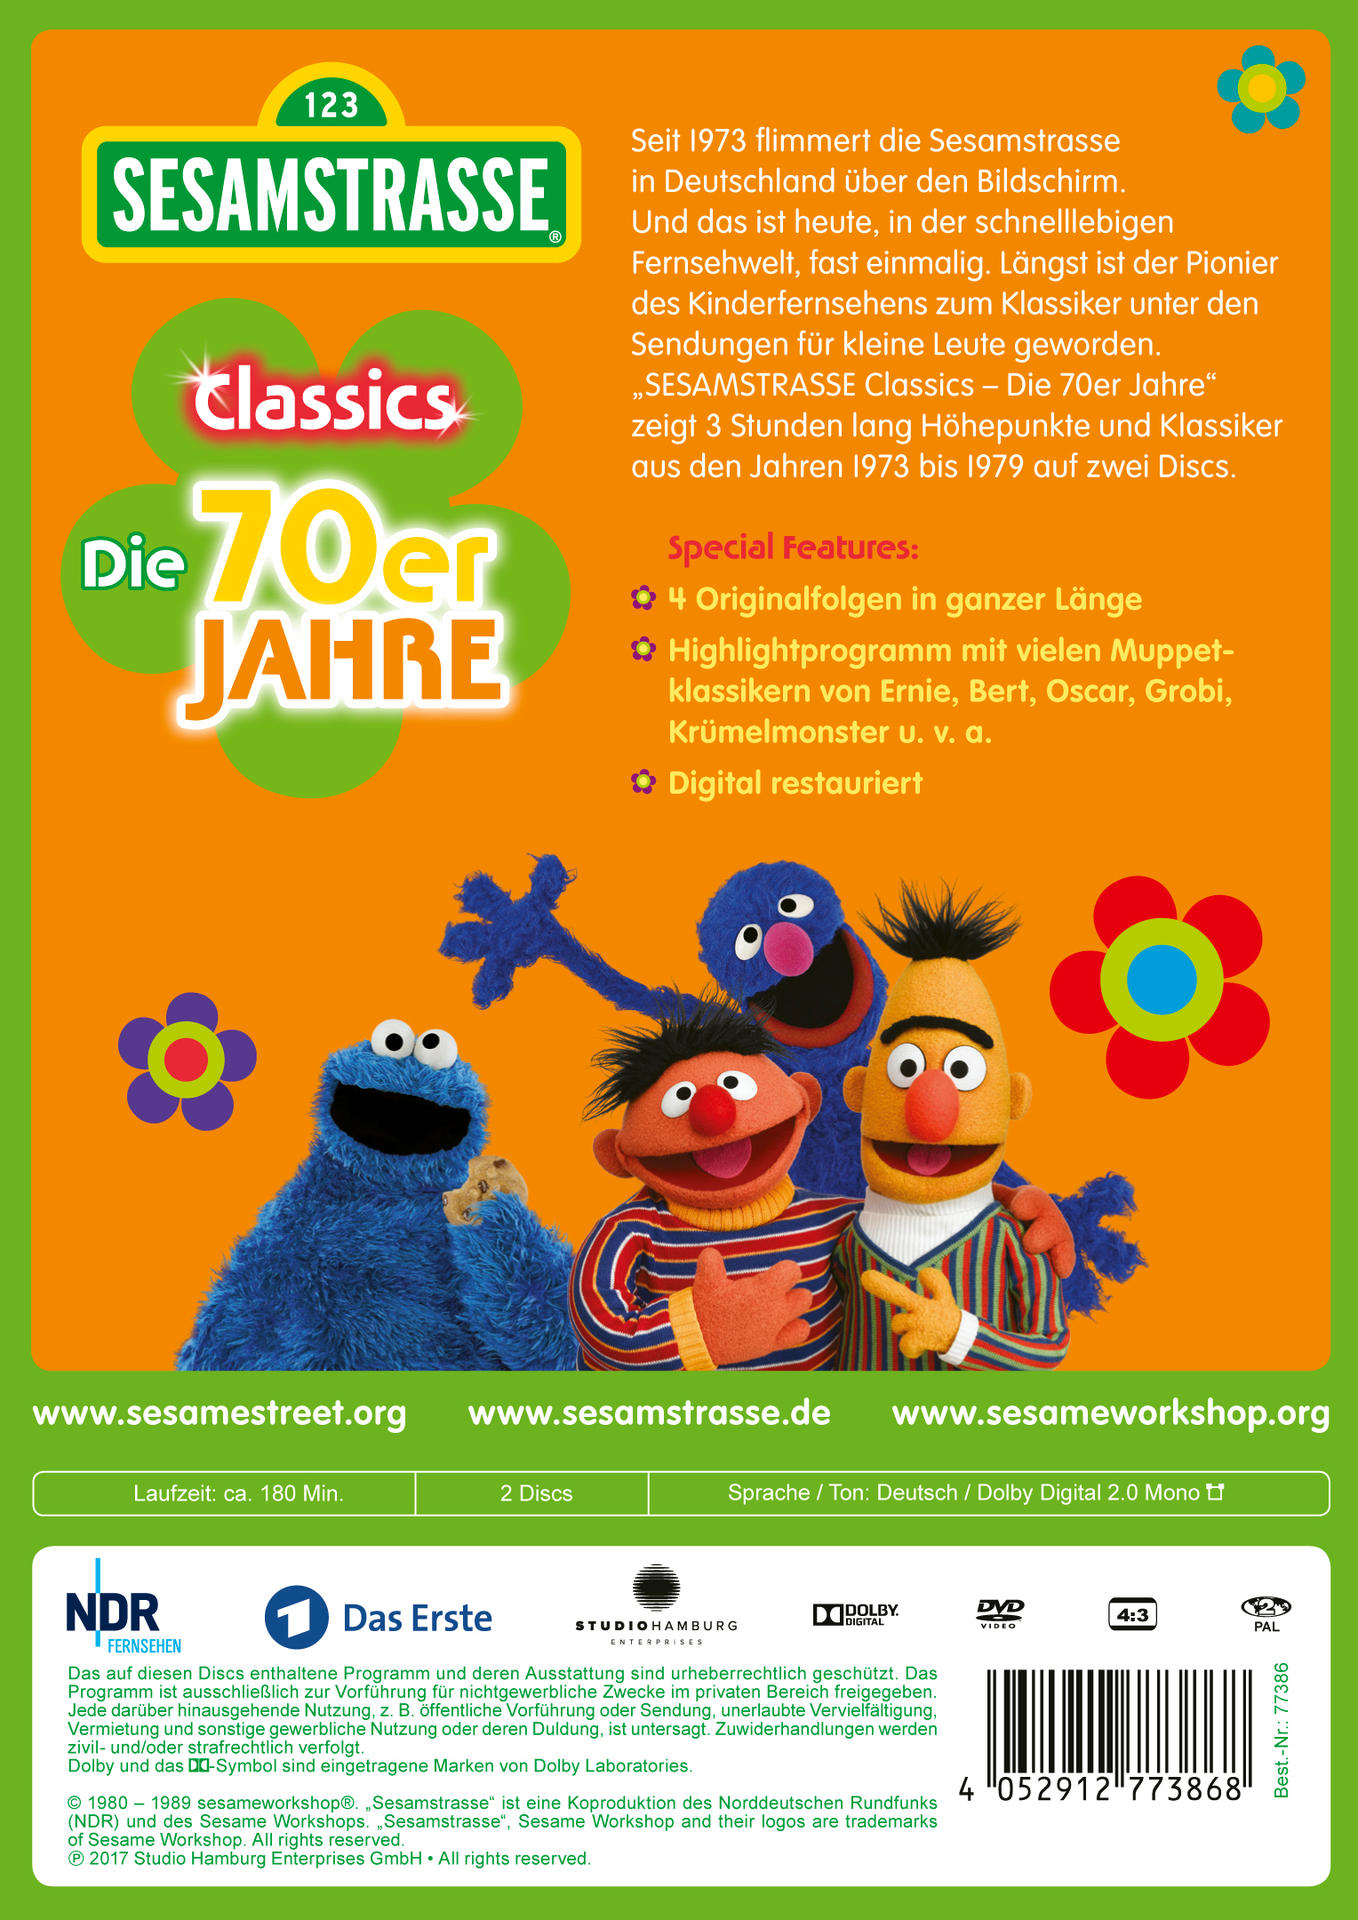 Classics Die DVD Sesamstraße 70er Jahre -